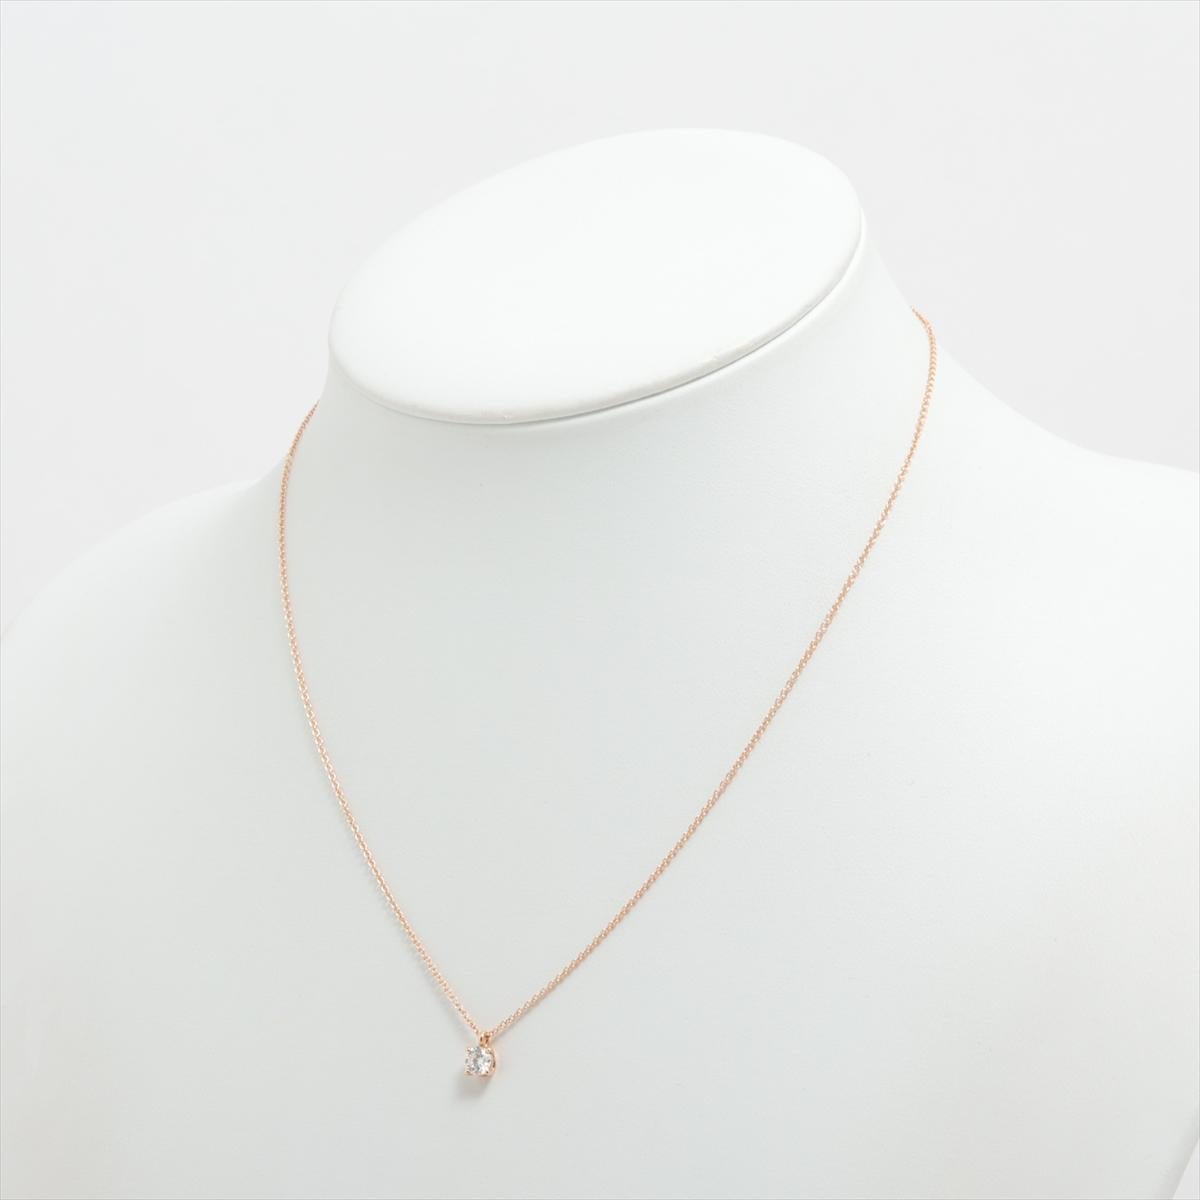  Tiffany Solitaire Diamond Necklace  5